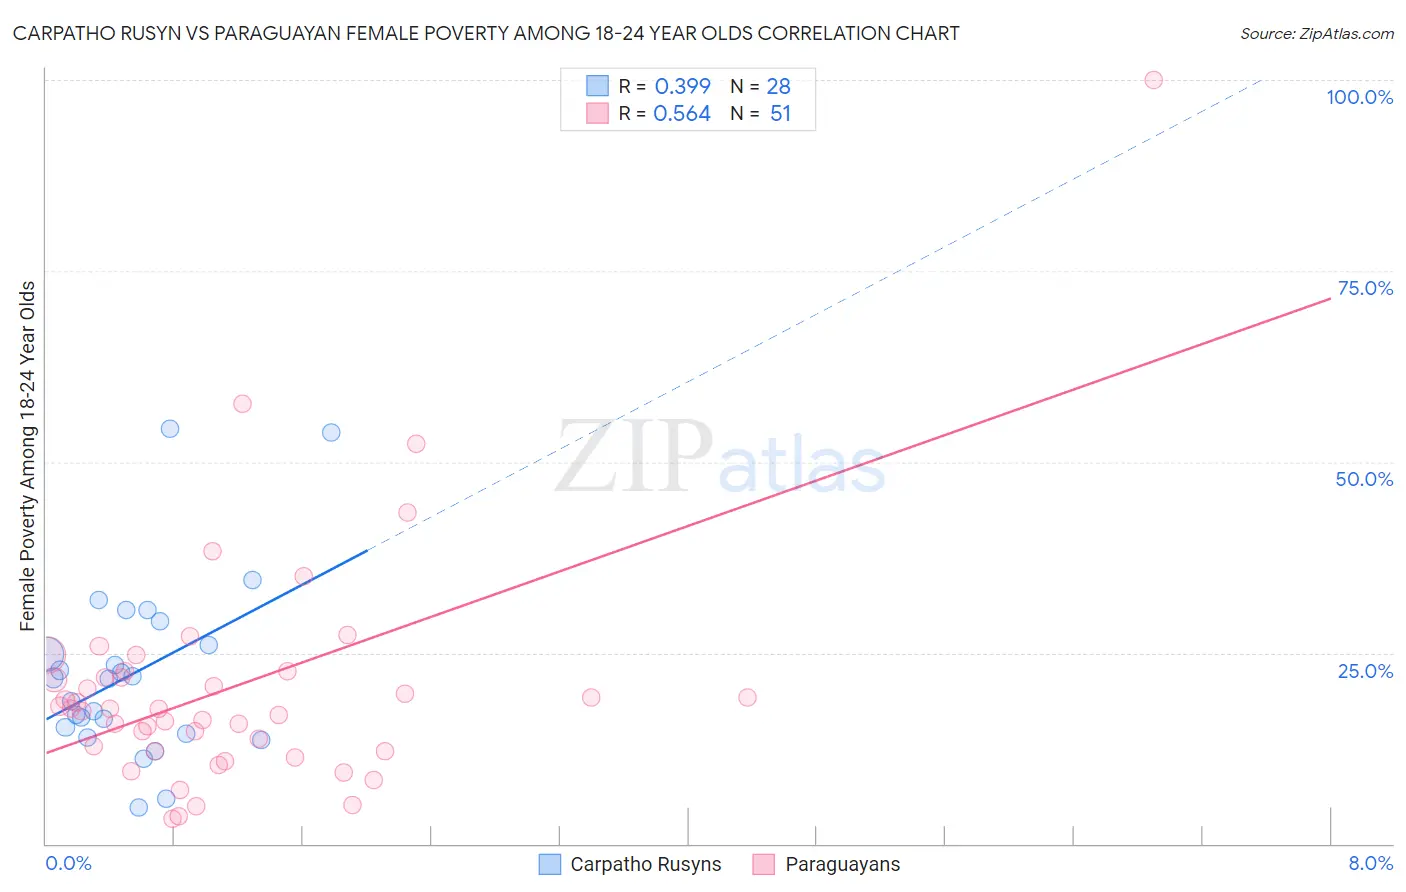 Carpatho Rusyn vs Paraguayan Female Poverty Among 18-24 Year Olds